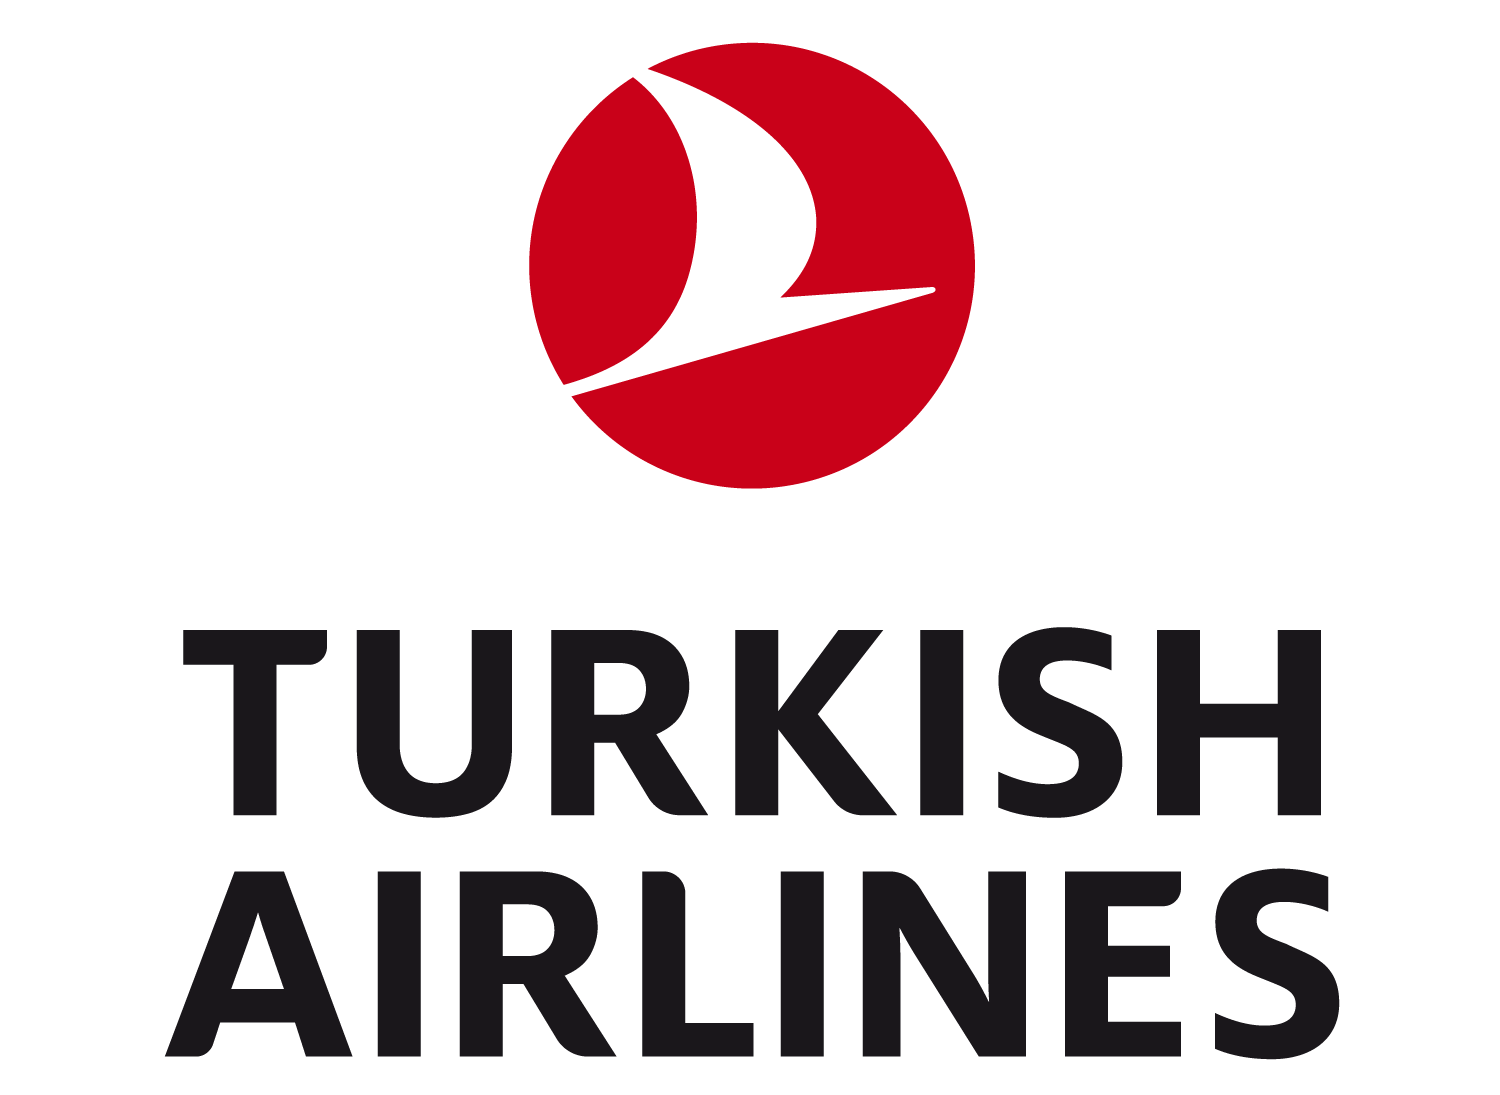 Logo Turkish Airlines